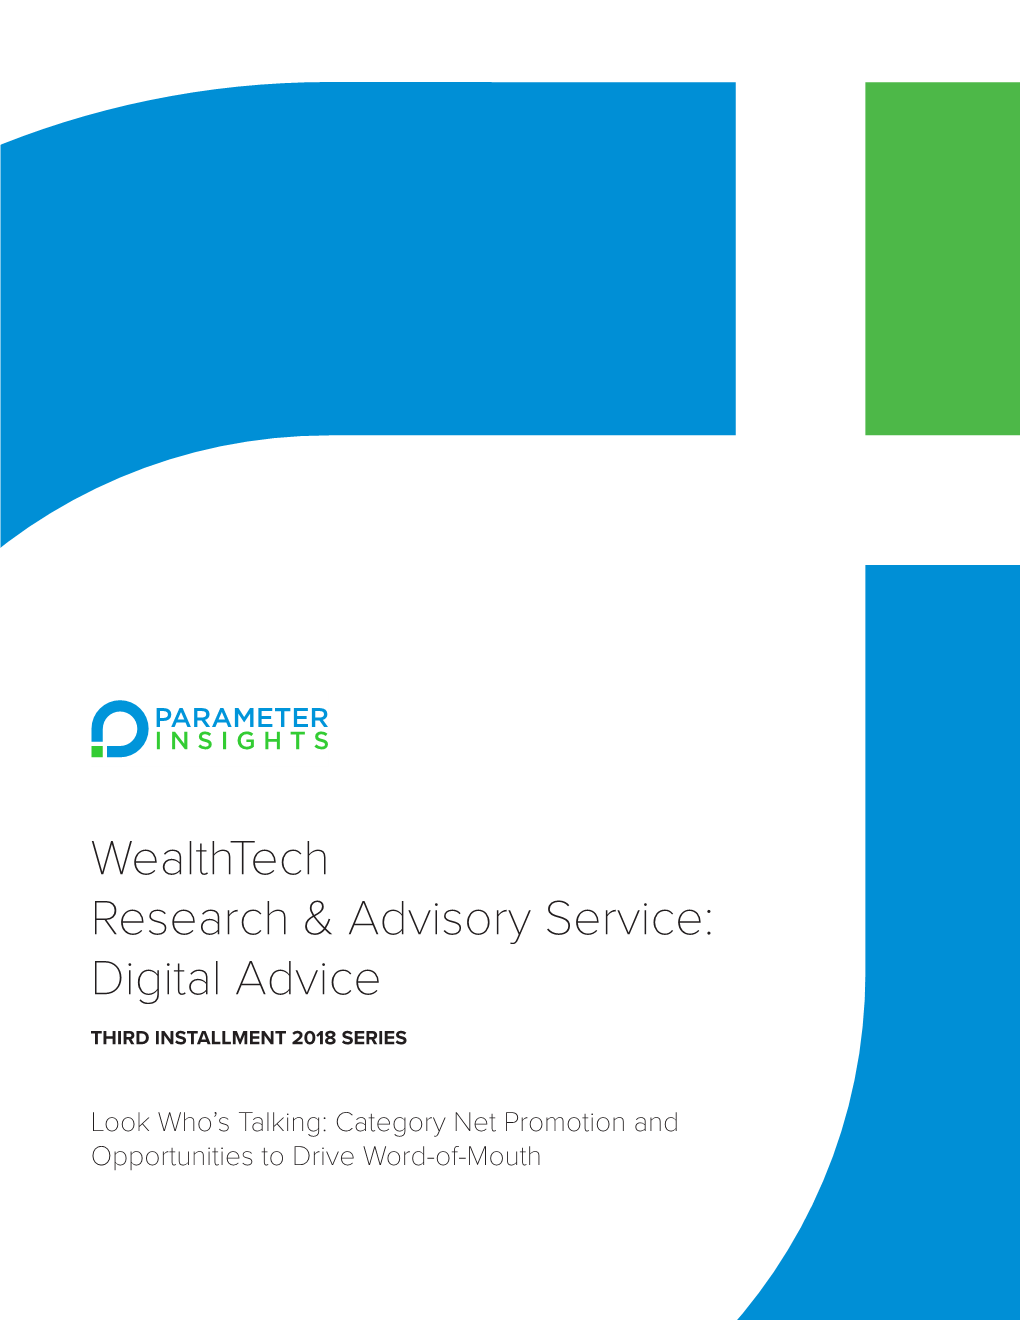 Wealthtech Research & Advisory Service: Digital Advice